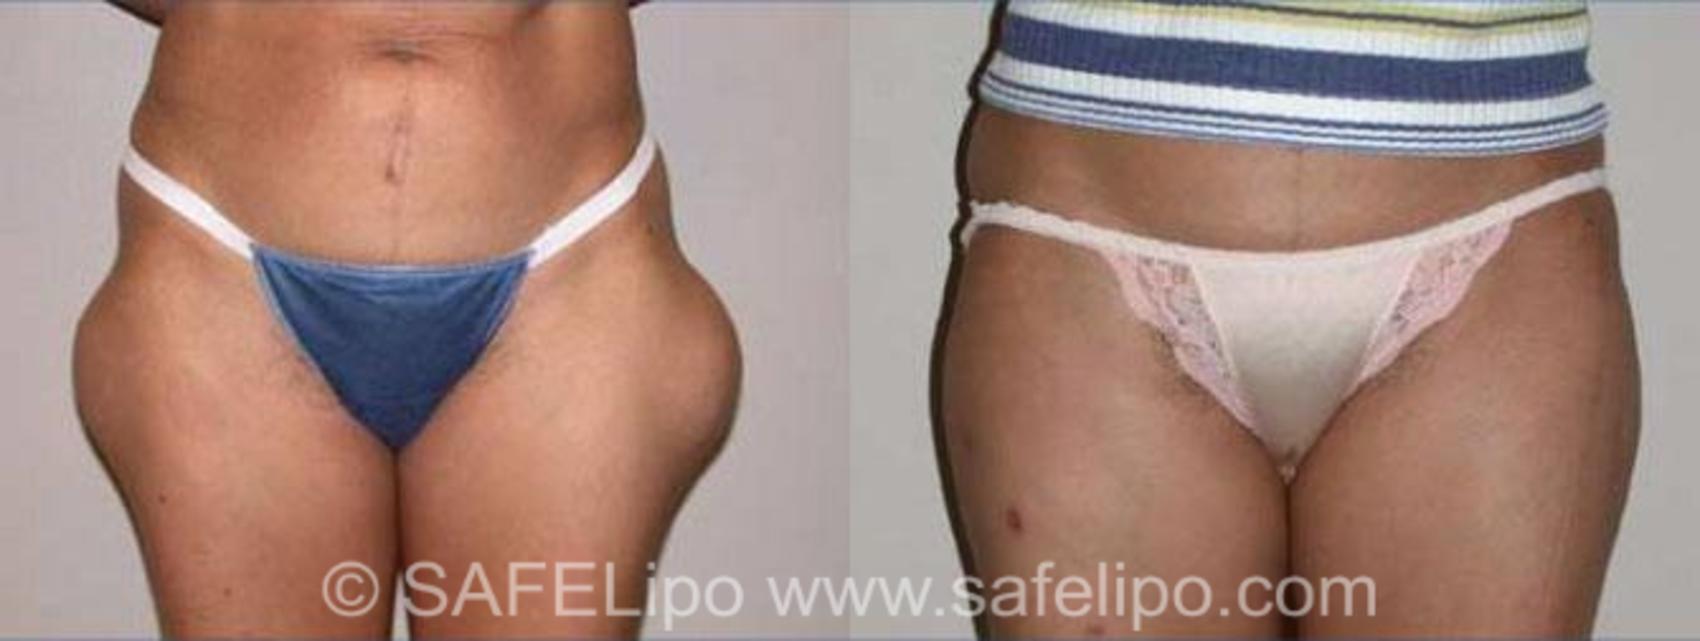 SAFELipoHD® Case 142 Before & After View #1 | SAFELipo®